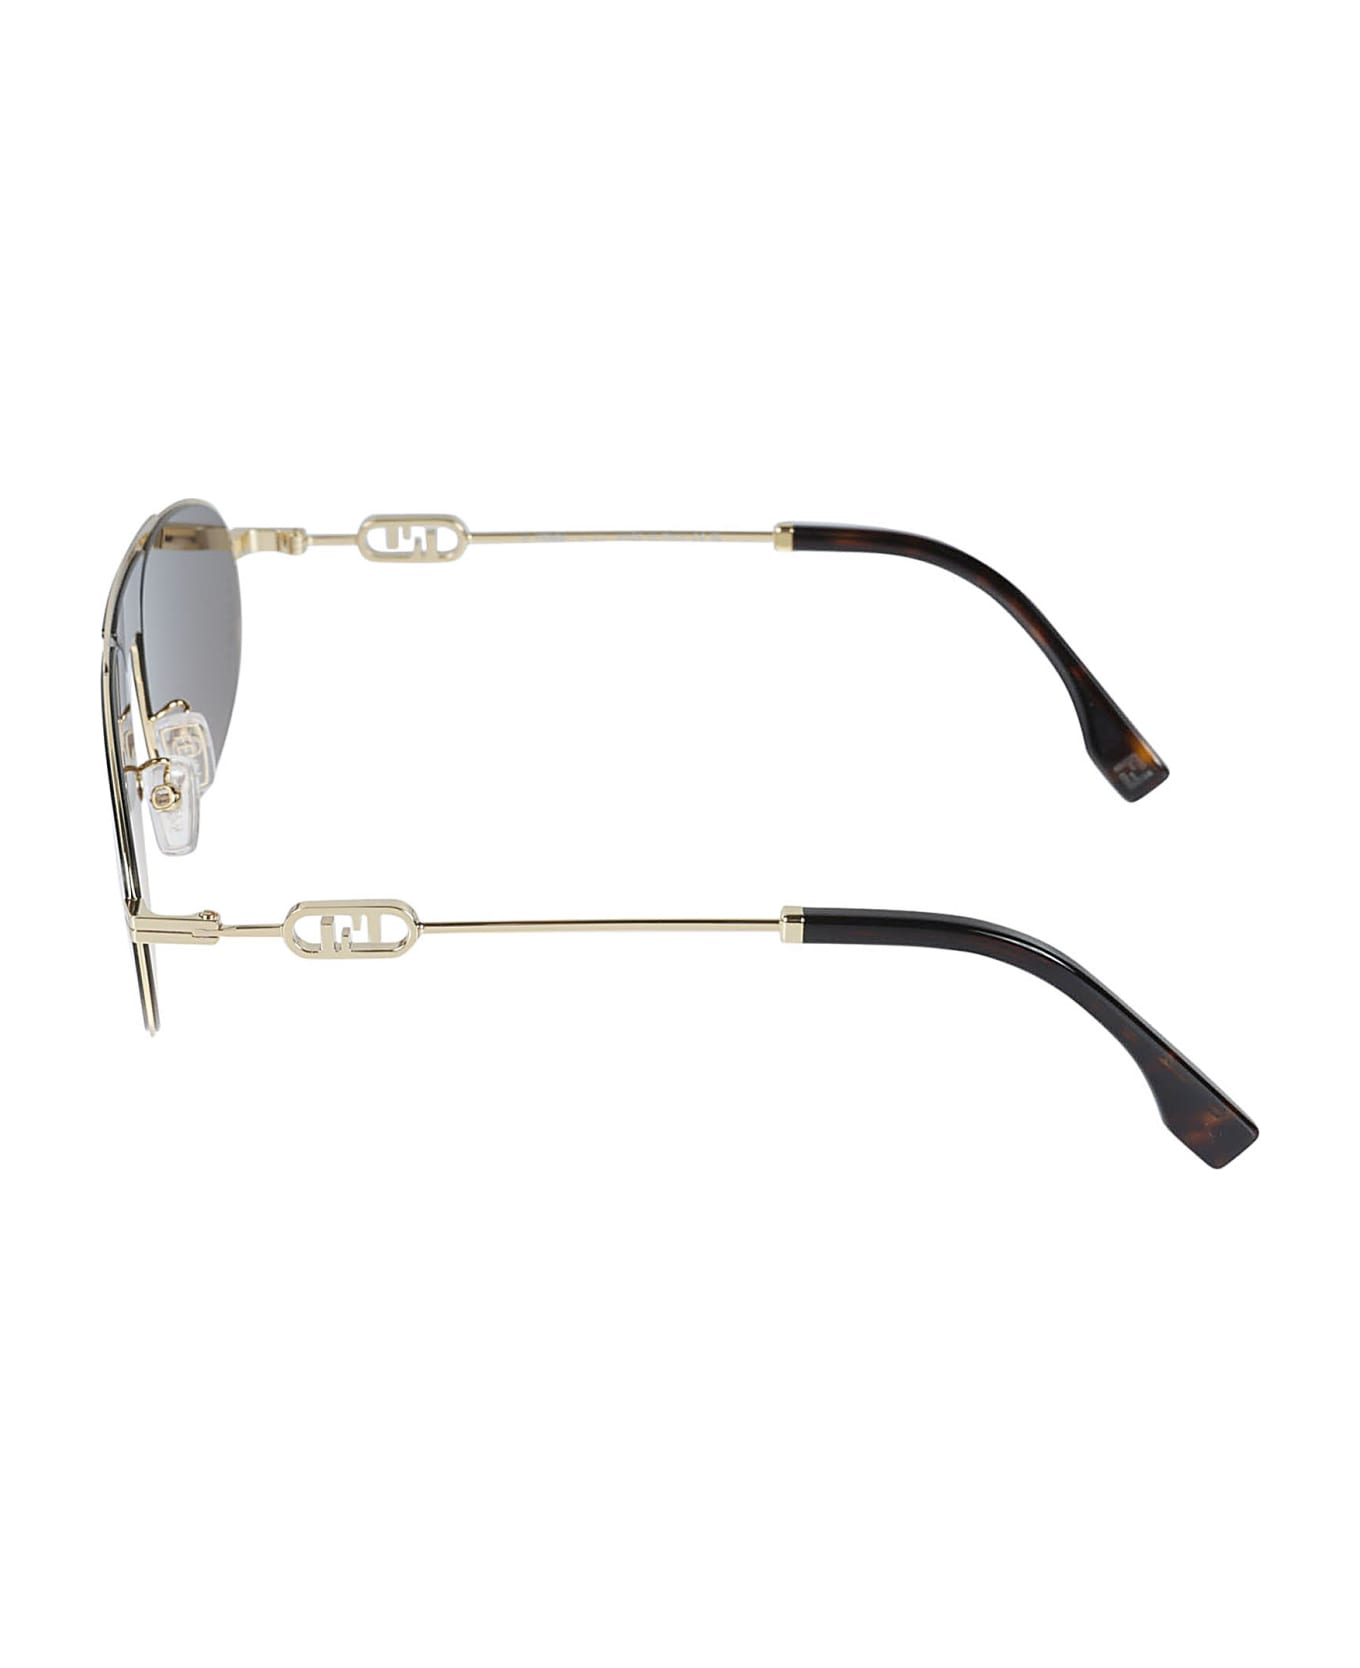 Fendi Eyewear Oval Aviator Sunglasses - 30e サングラス